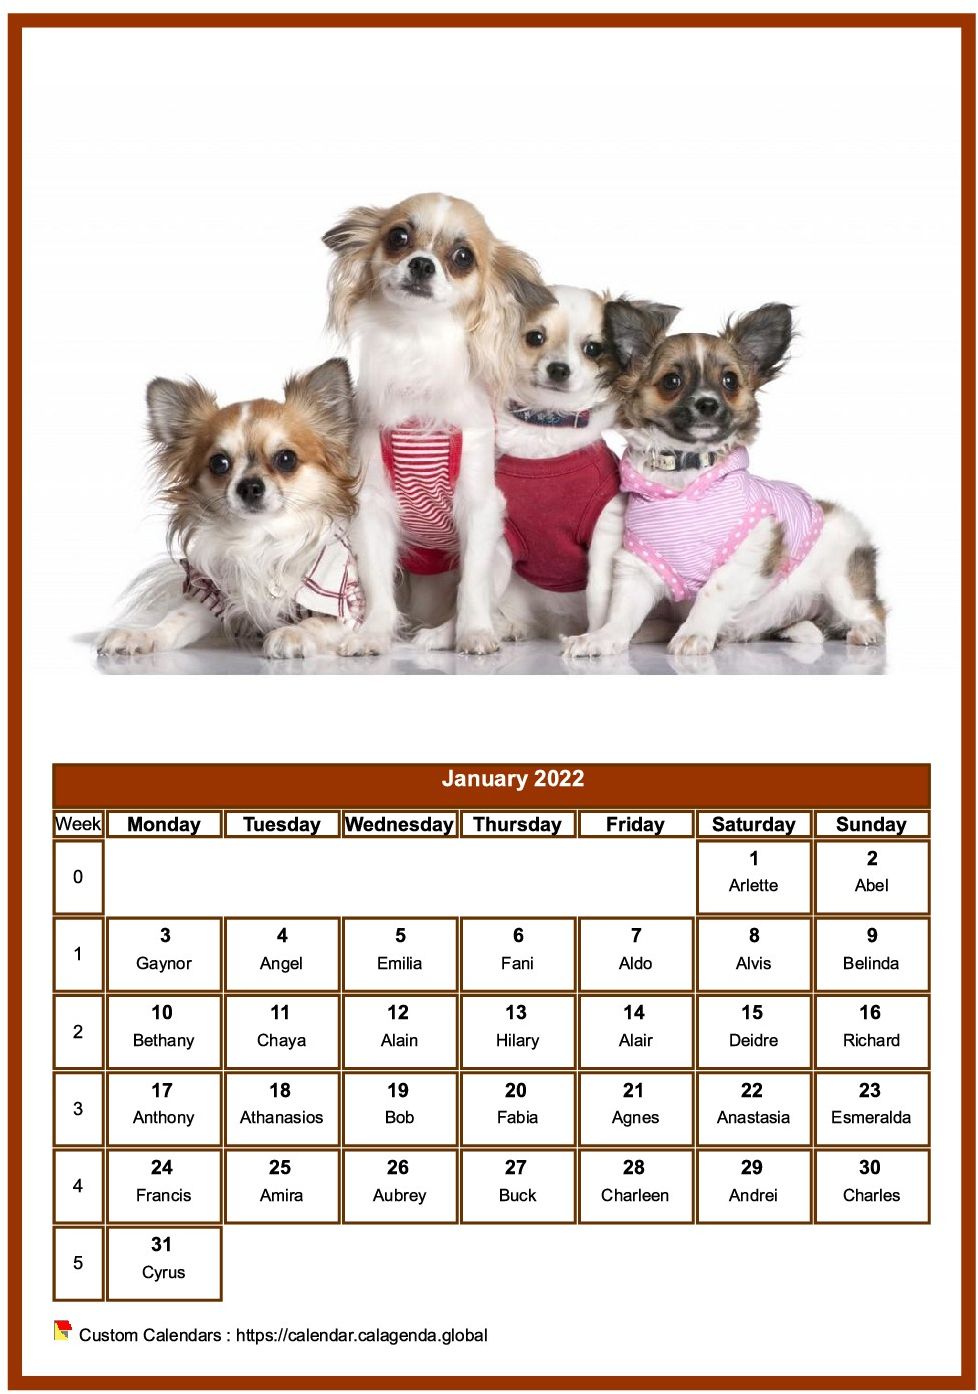 Calendar January 2022 dogs